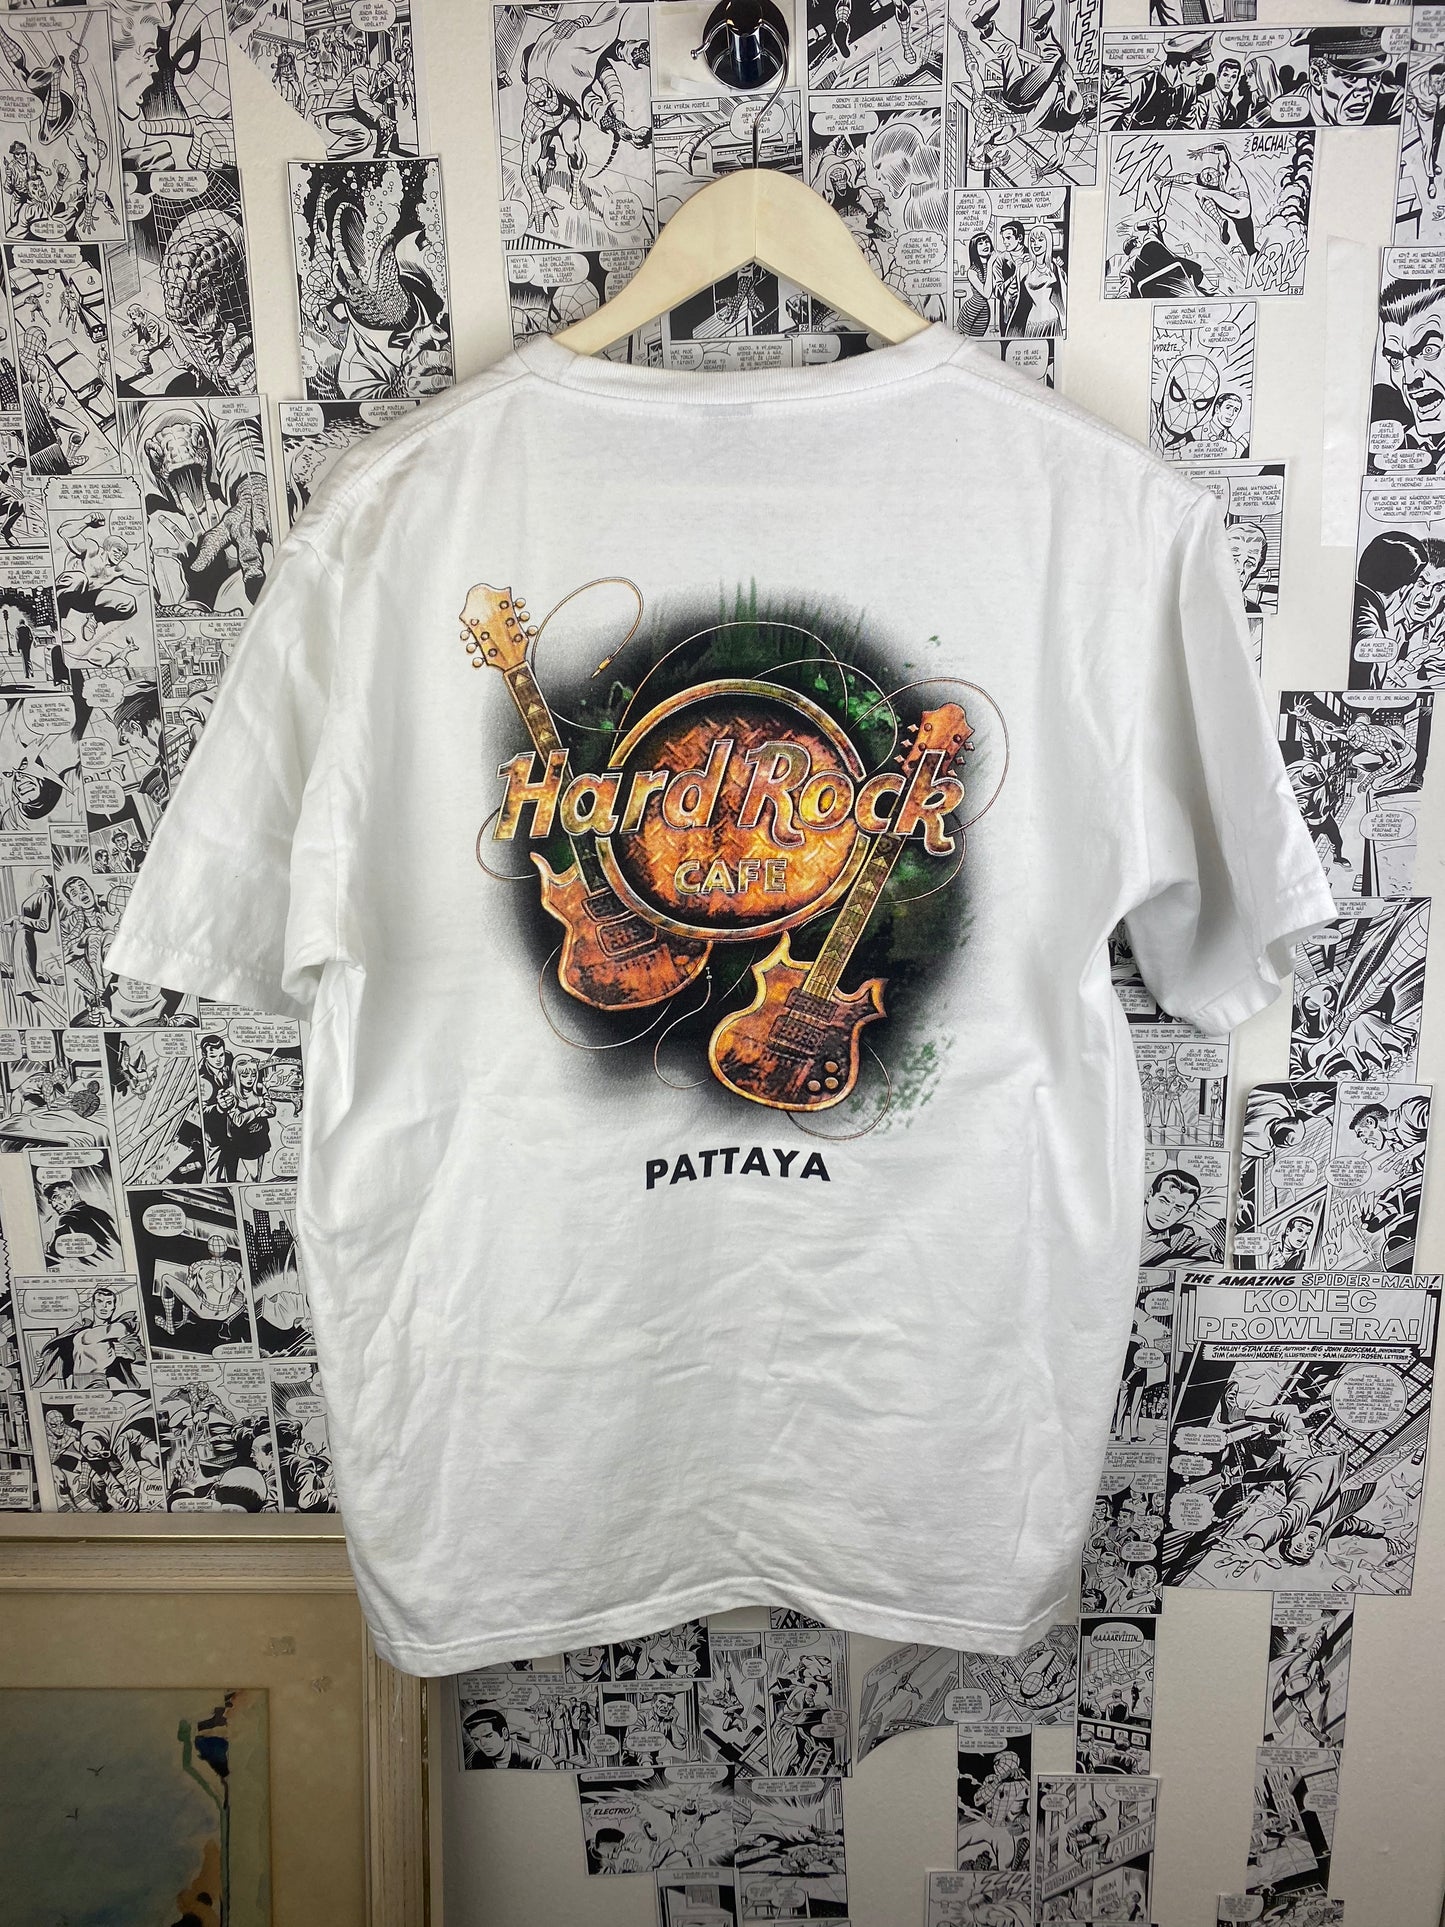 Vintage Hard Rock Cafe “Pattaya” t-shirt - size XL